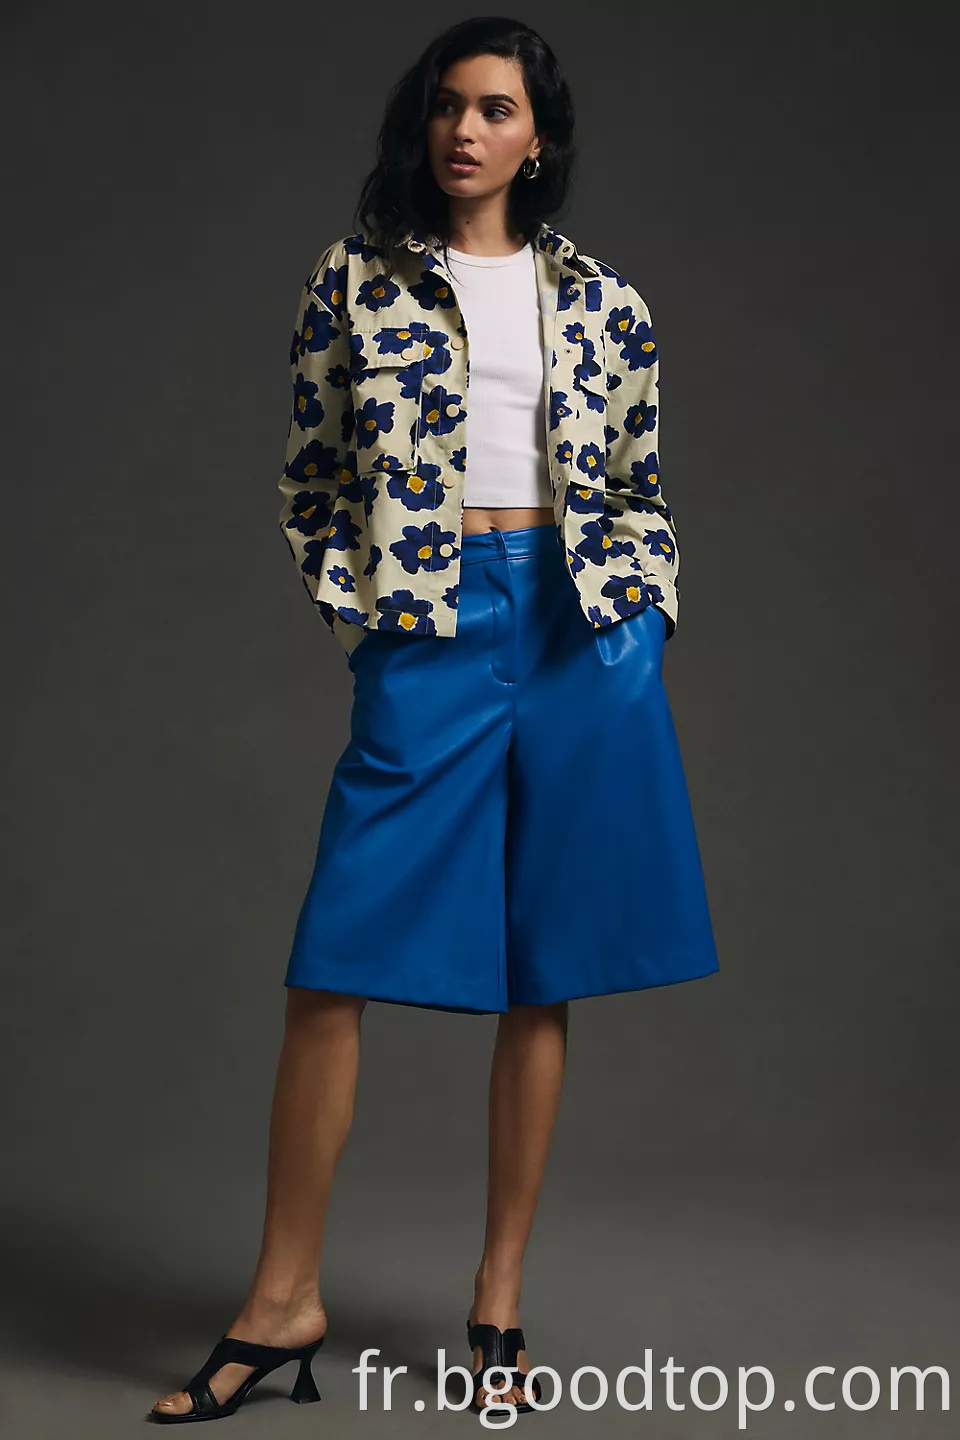 Fashionable and versatile women's floral jacket